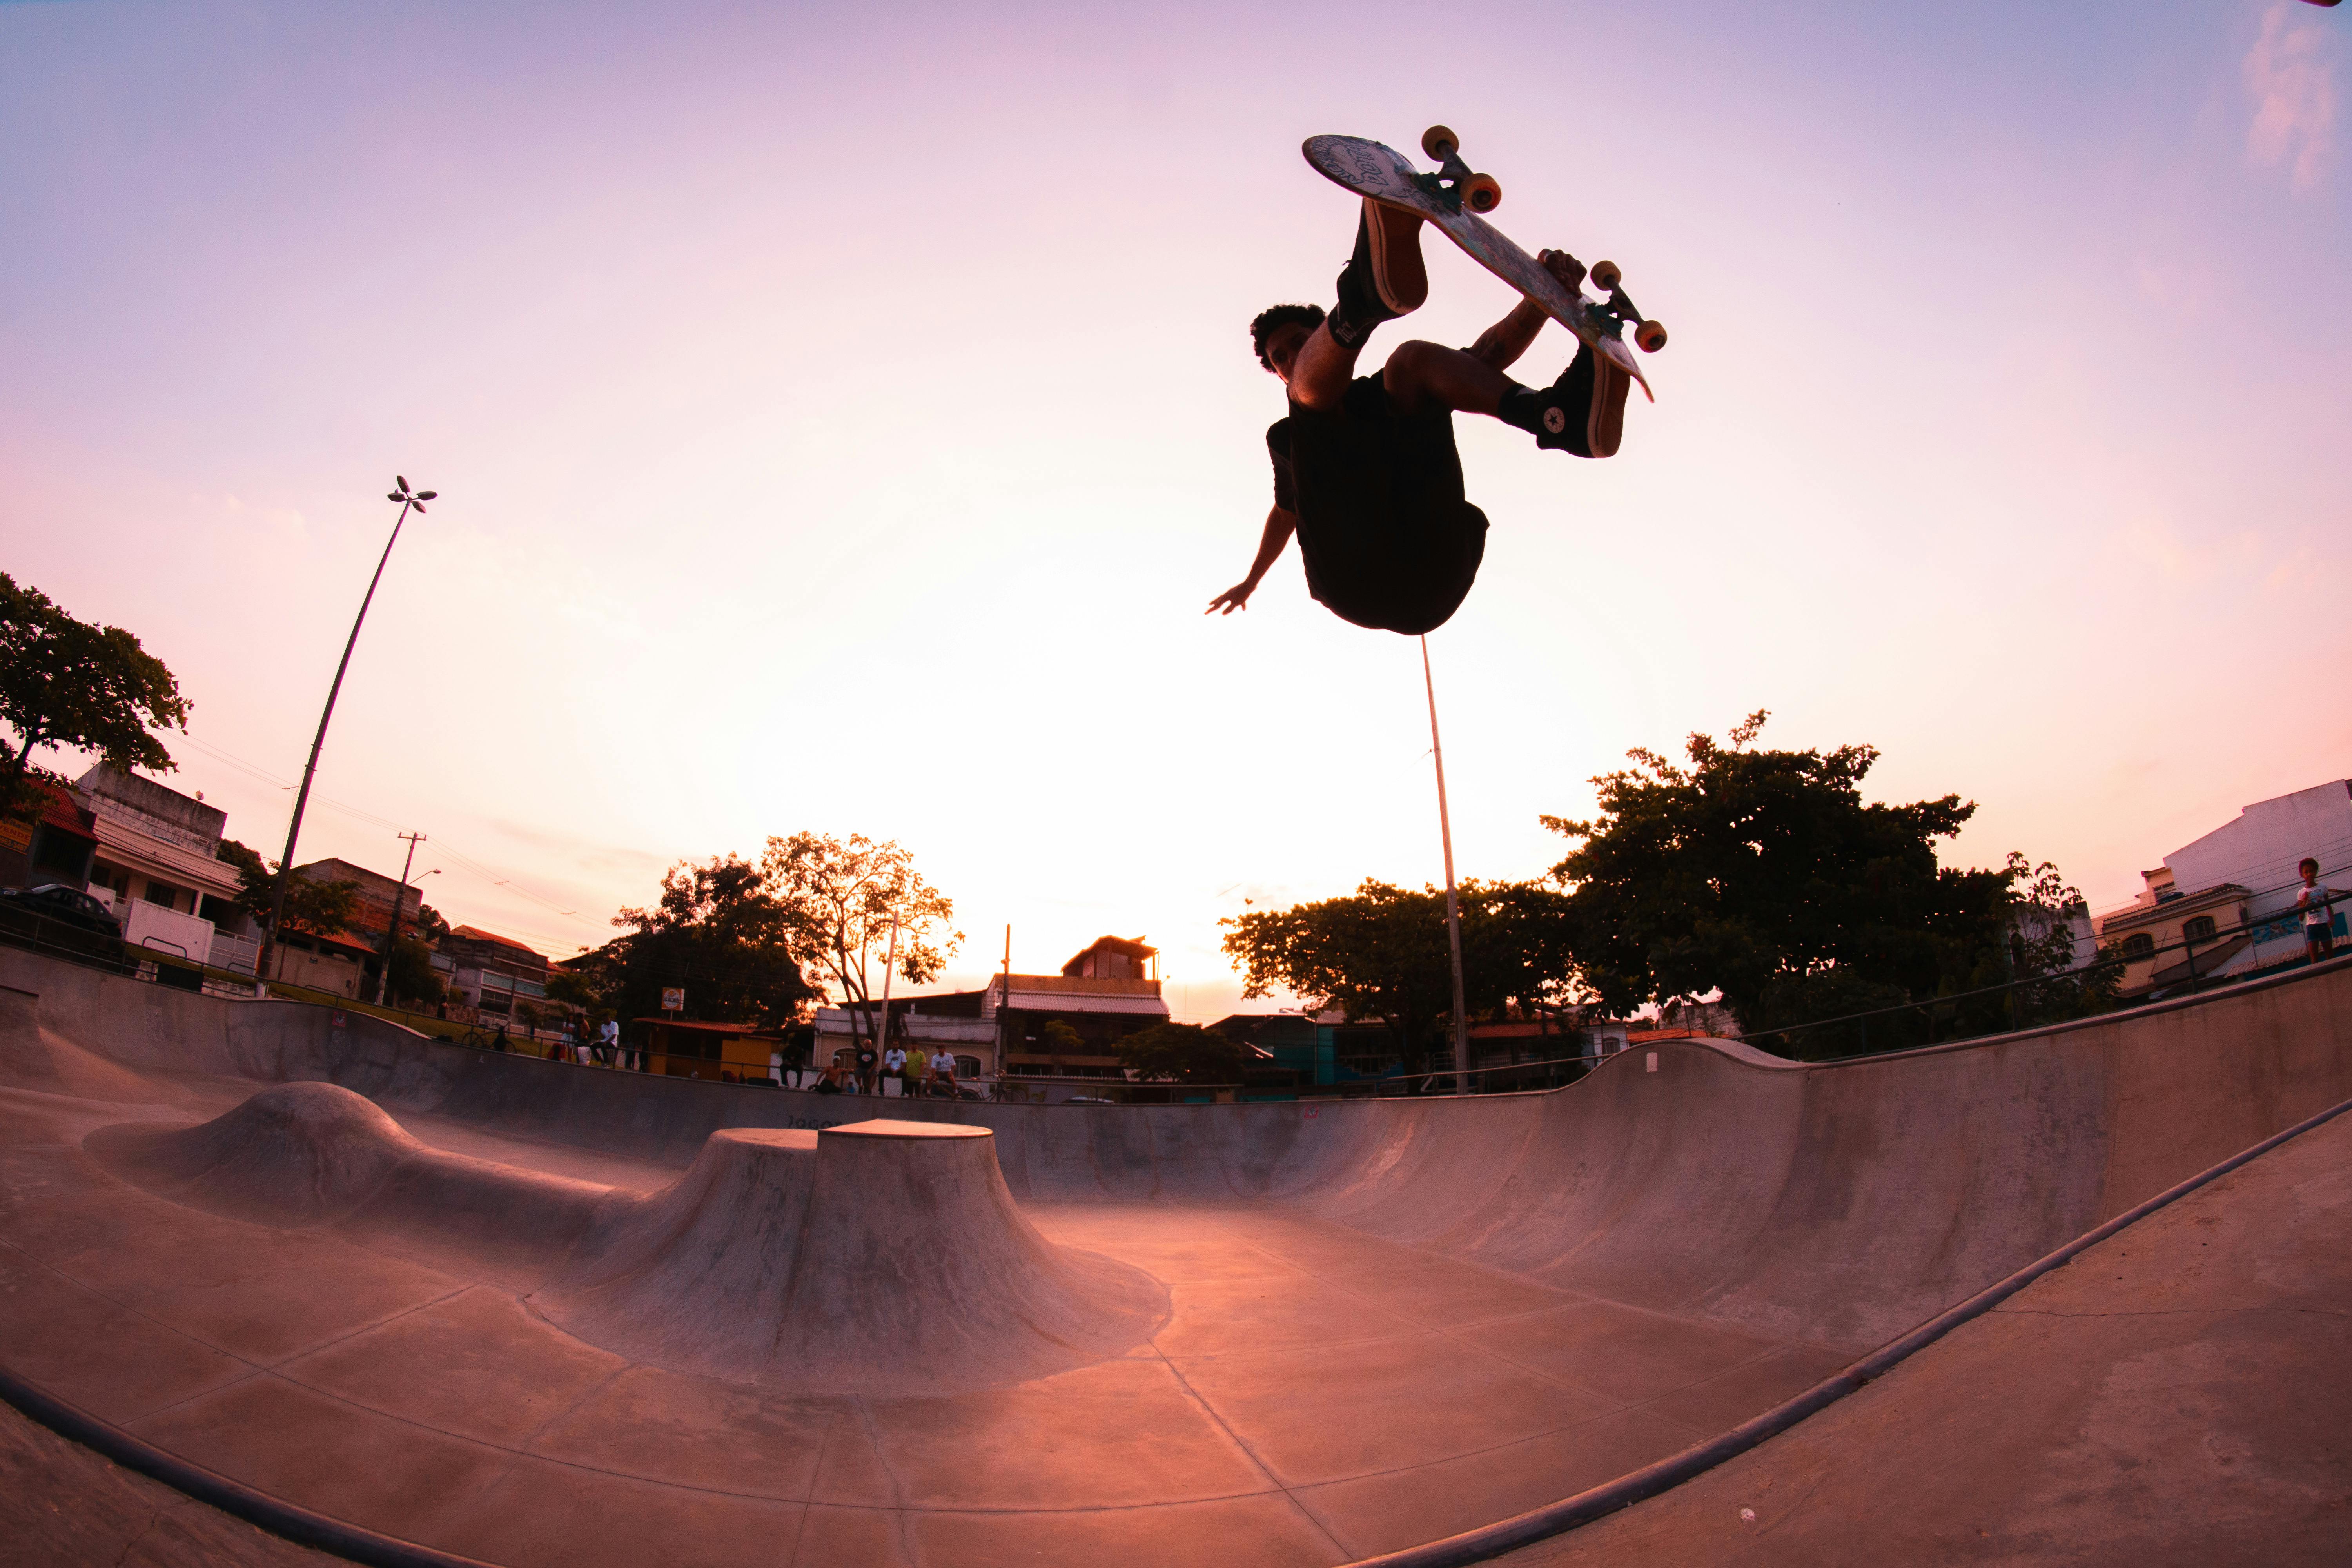 Bakken Doe herleven Concurrenten Time Lapse Photography of Man Doing Skateboard Trick · Free Stock Photo